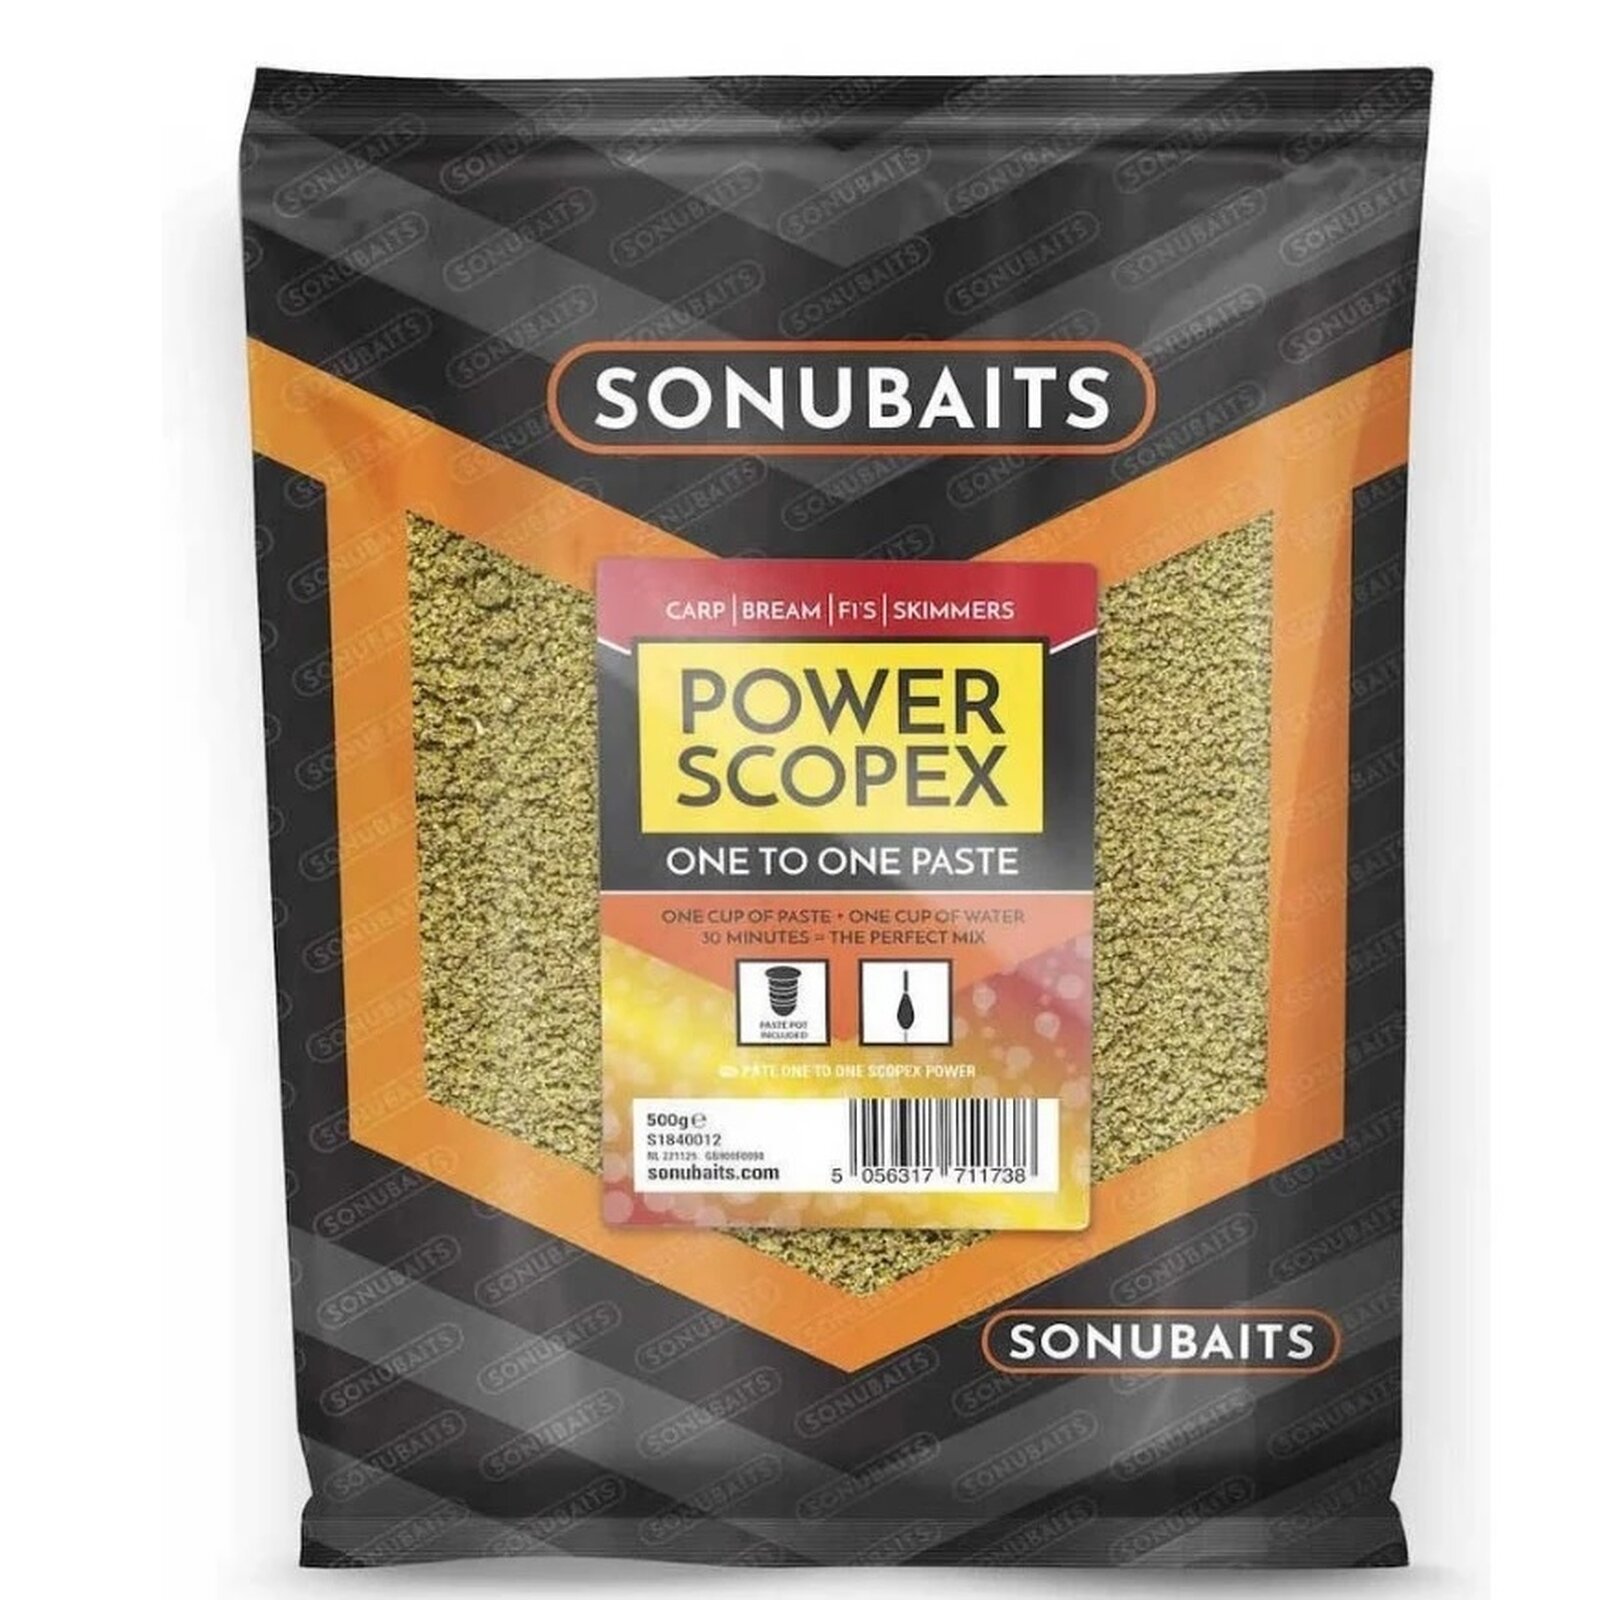 Sonubaits One to One Paste Power Scopex 500g